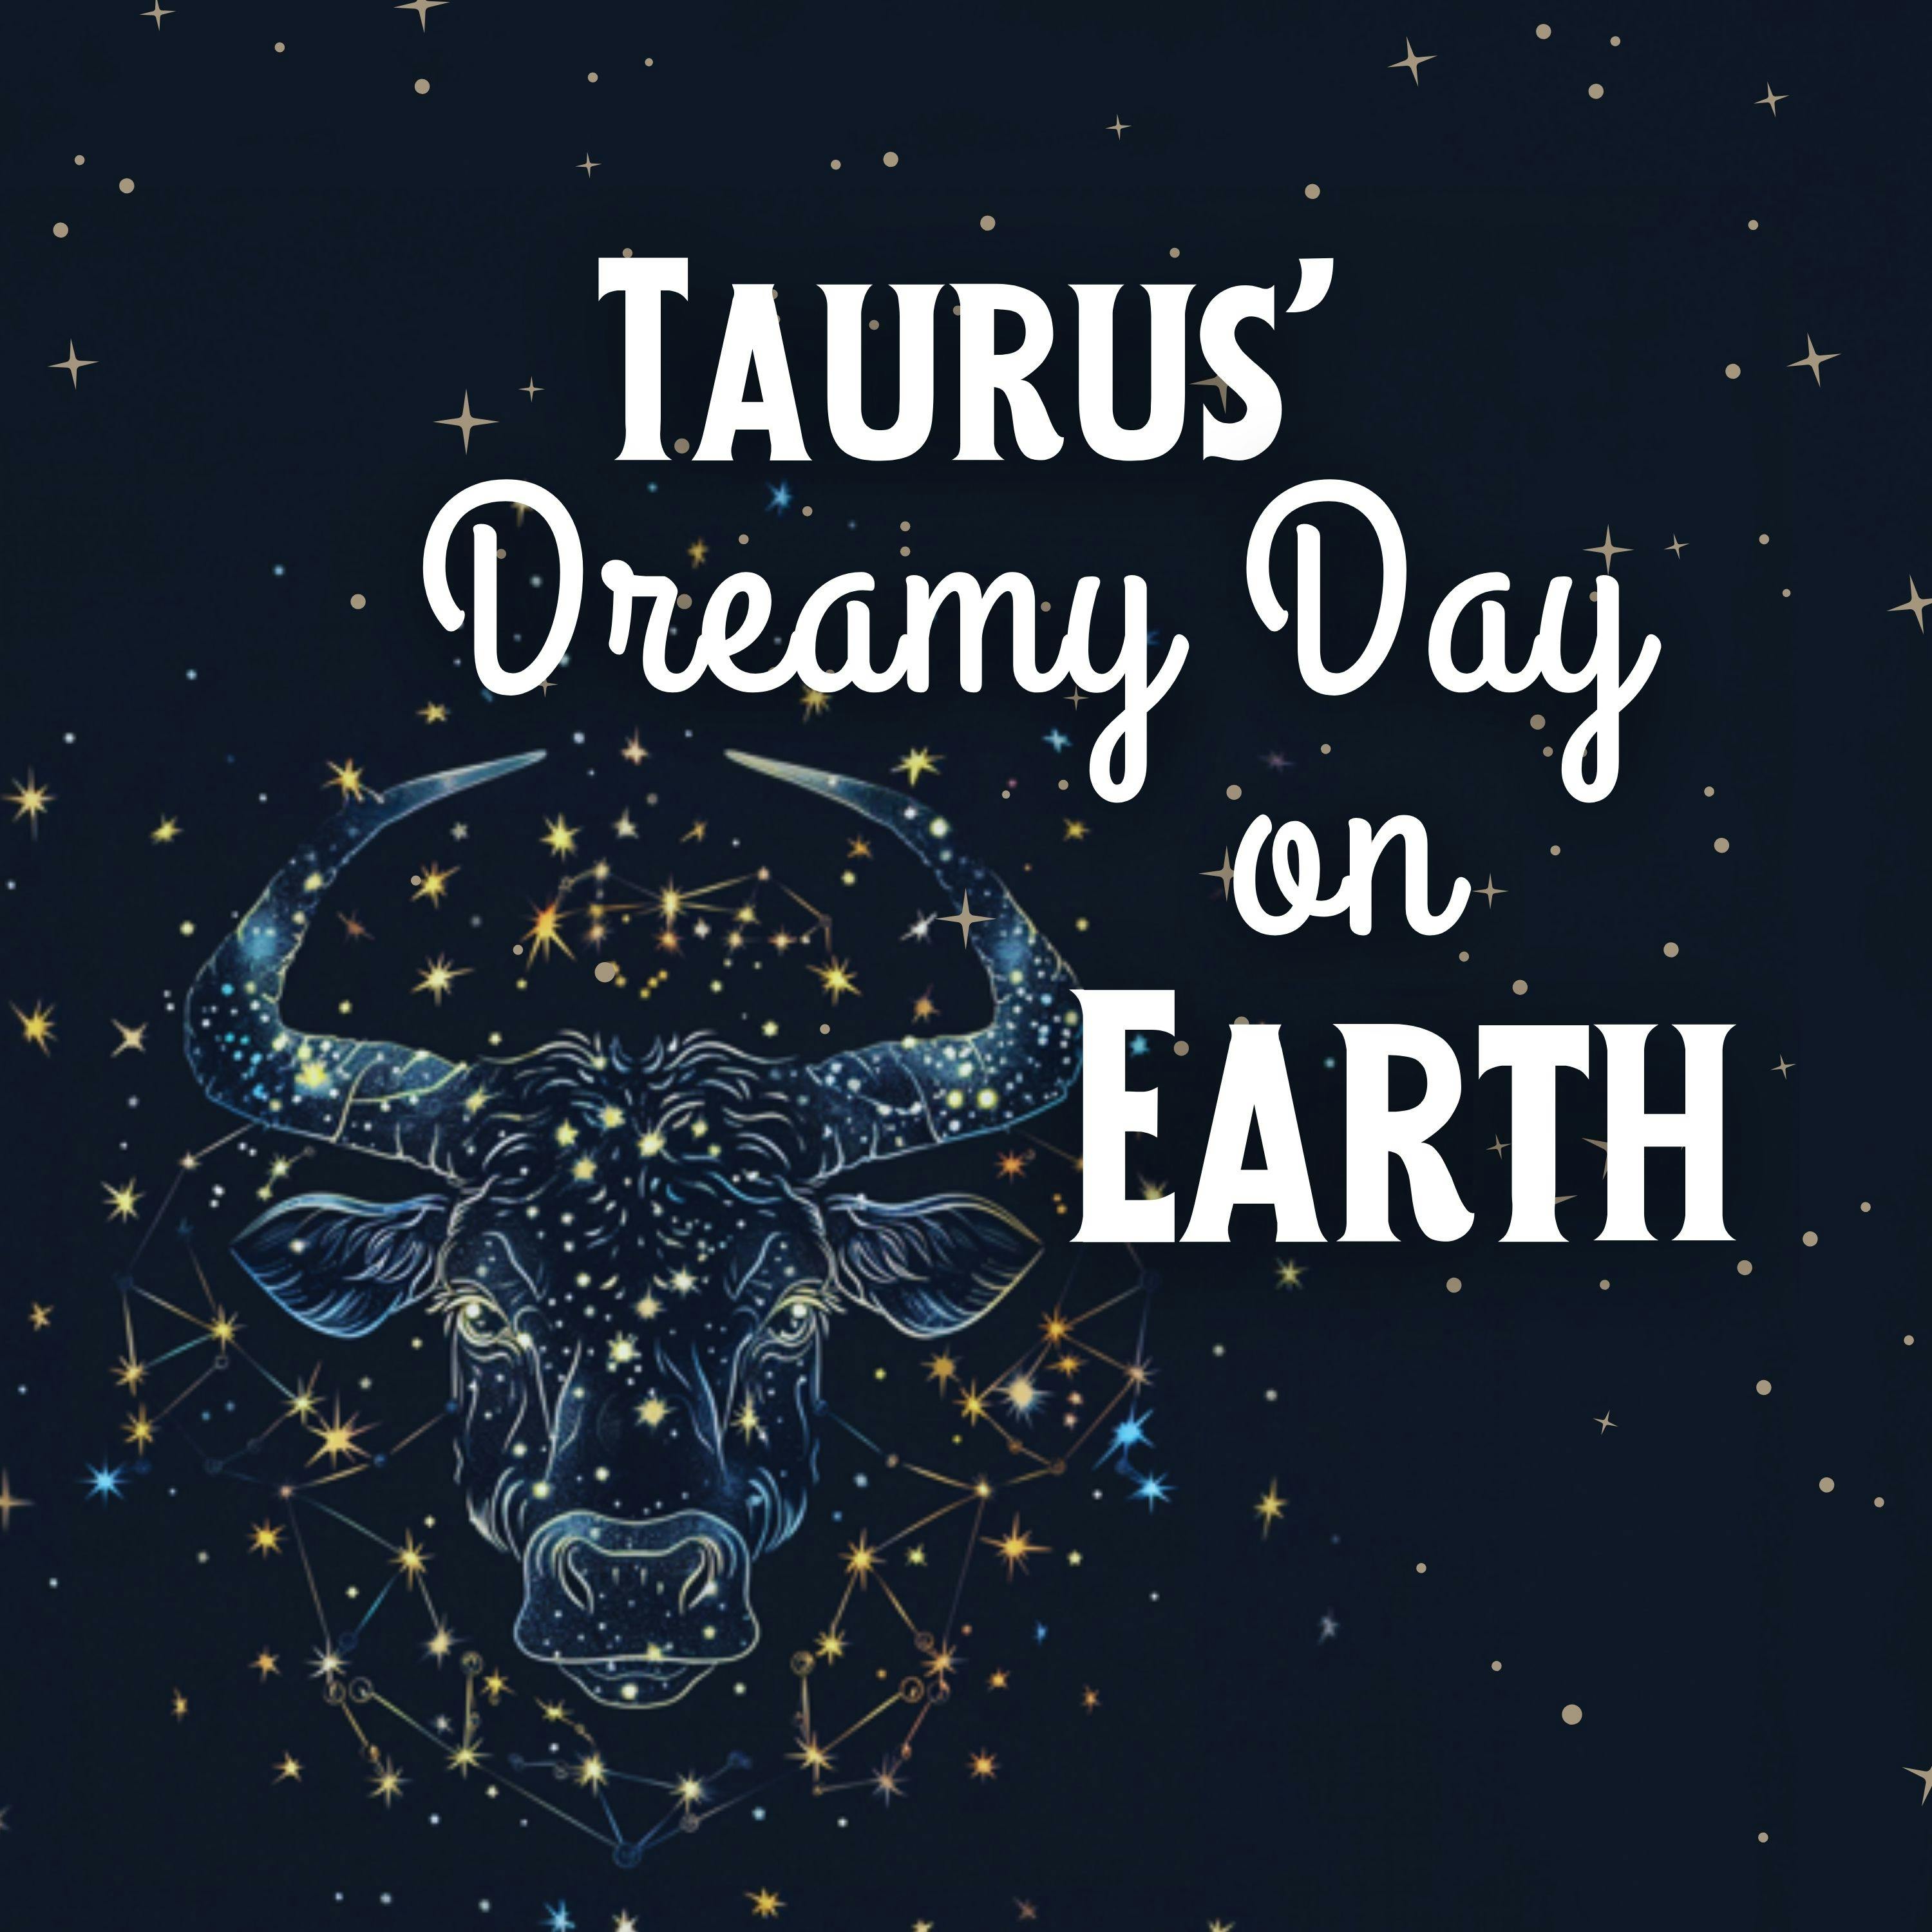 Taurus’ Dreamy Day on Earth